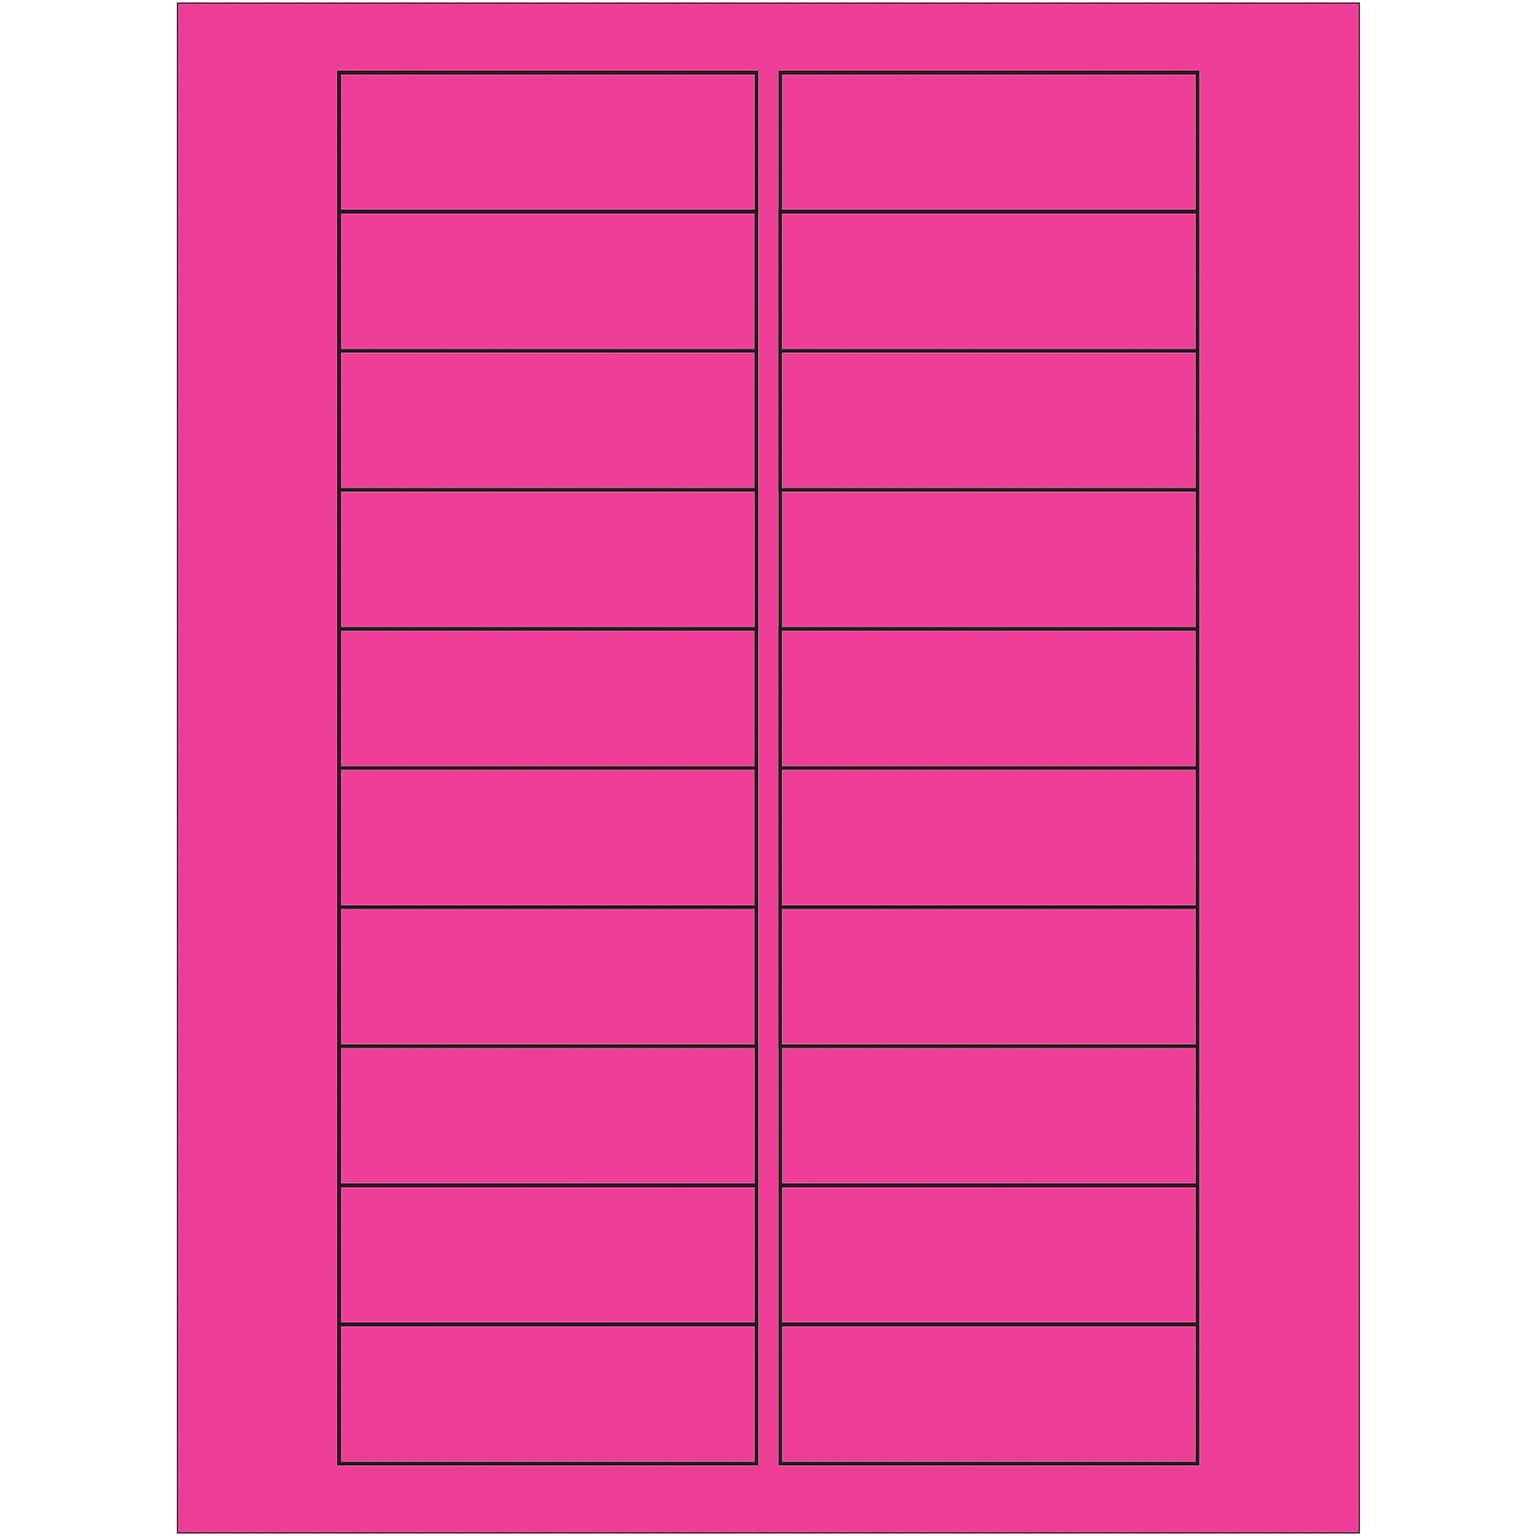 Tape Logic Rectangle Laser Labels, 3 x 1, Fluorescent Pink, 2000/Case (LL174PK)